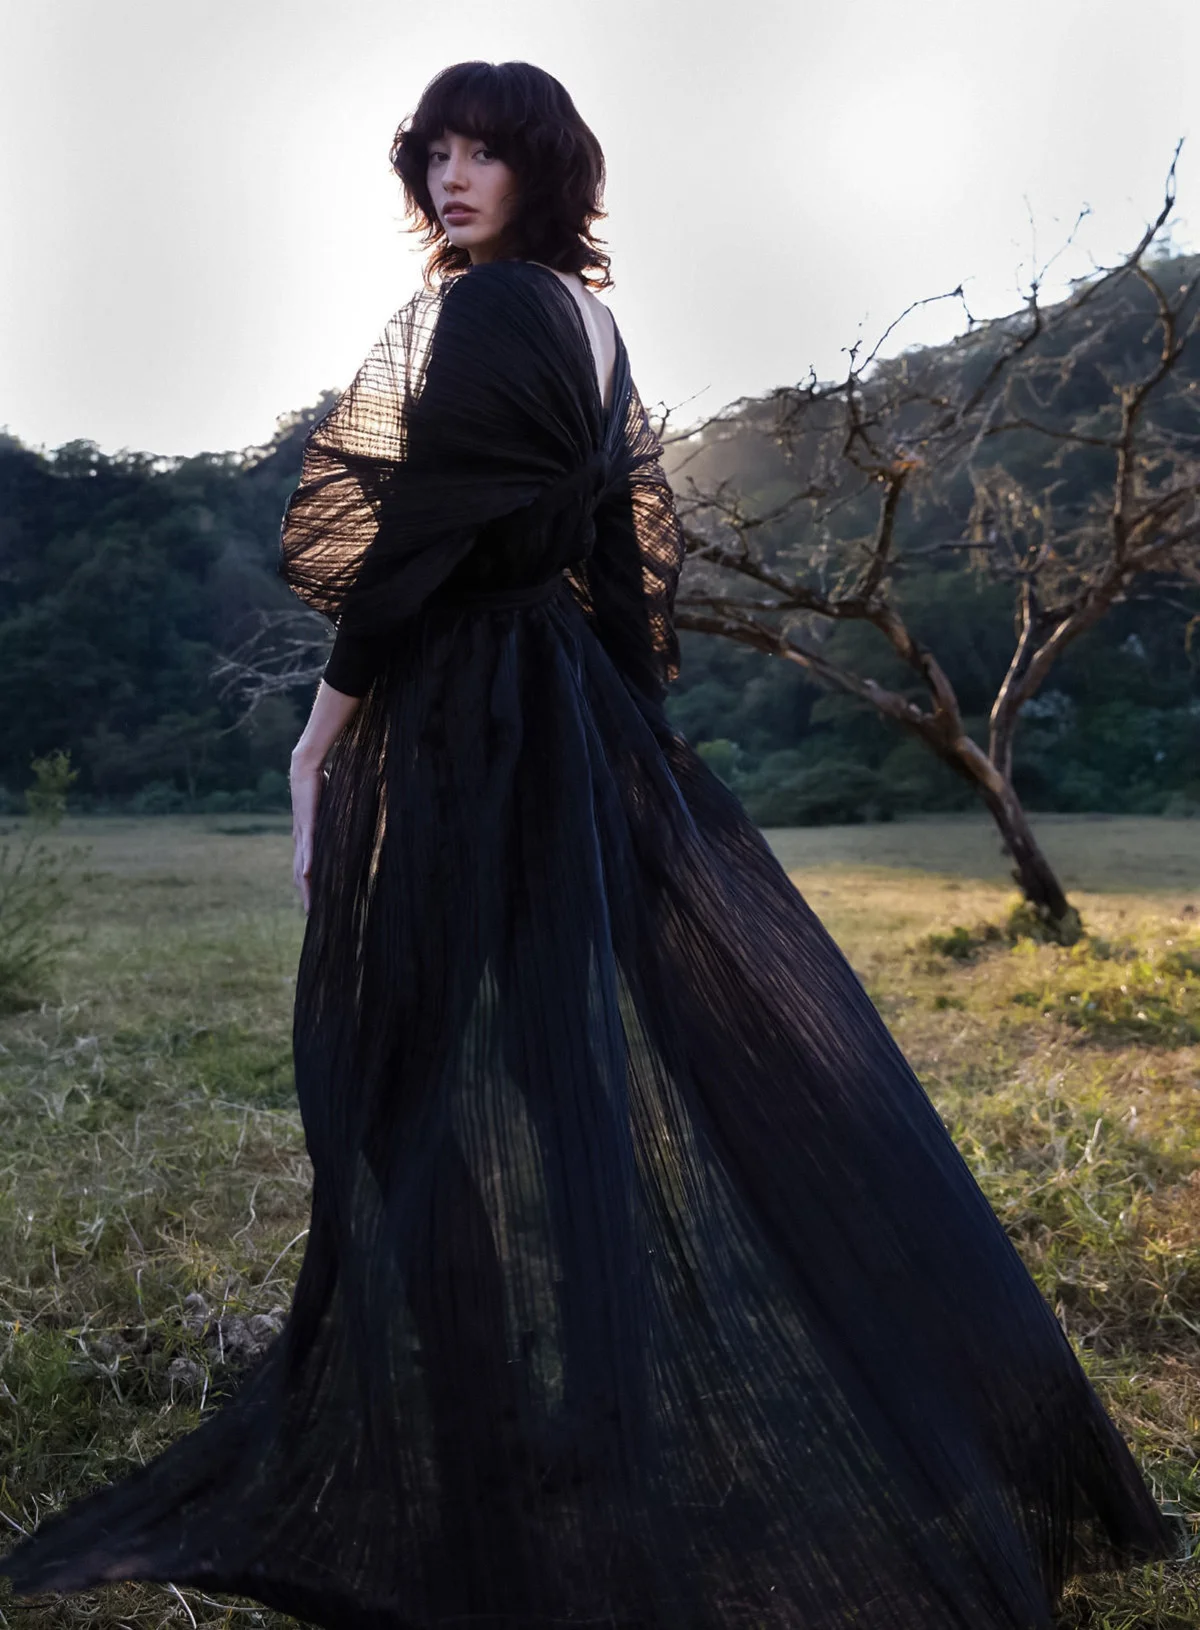 Karime Bribiesca by Conrad Dornan for Vogue Mexico & Latin America April 2022